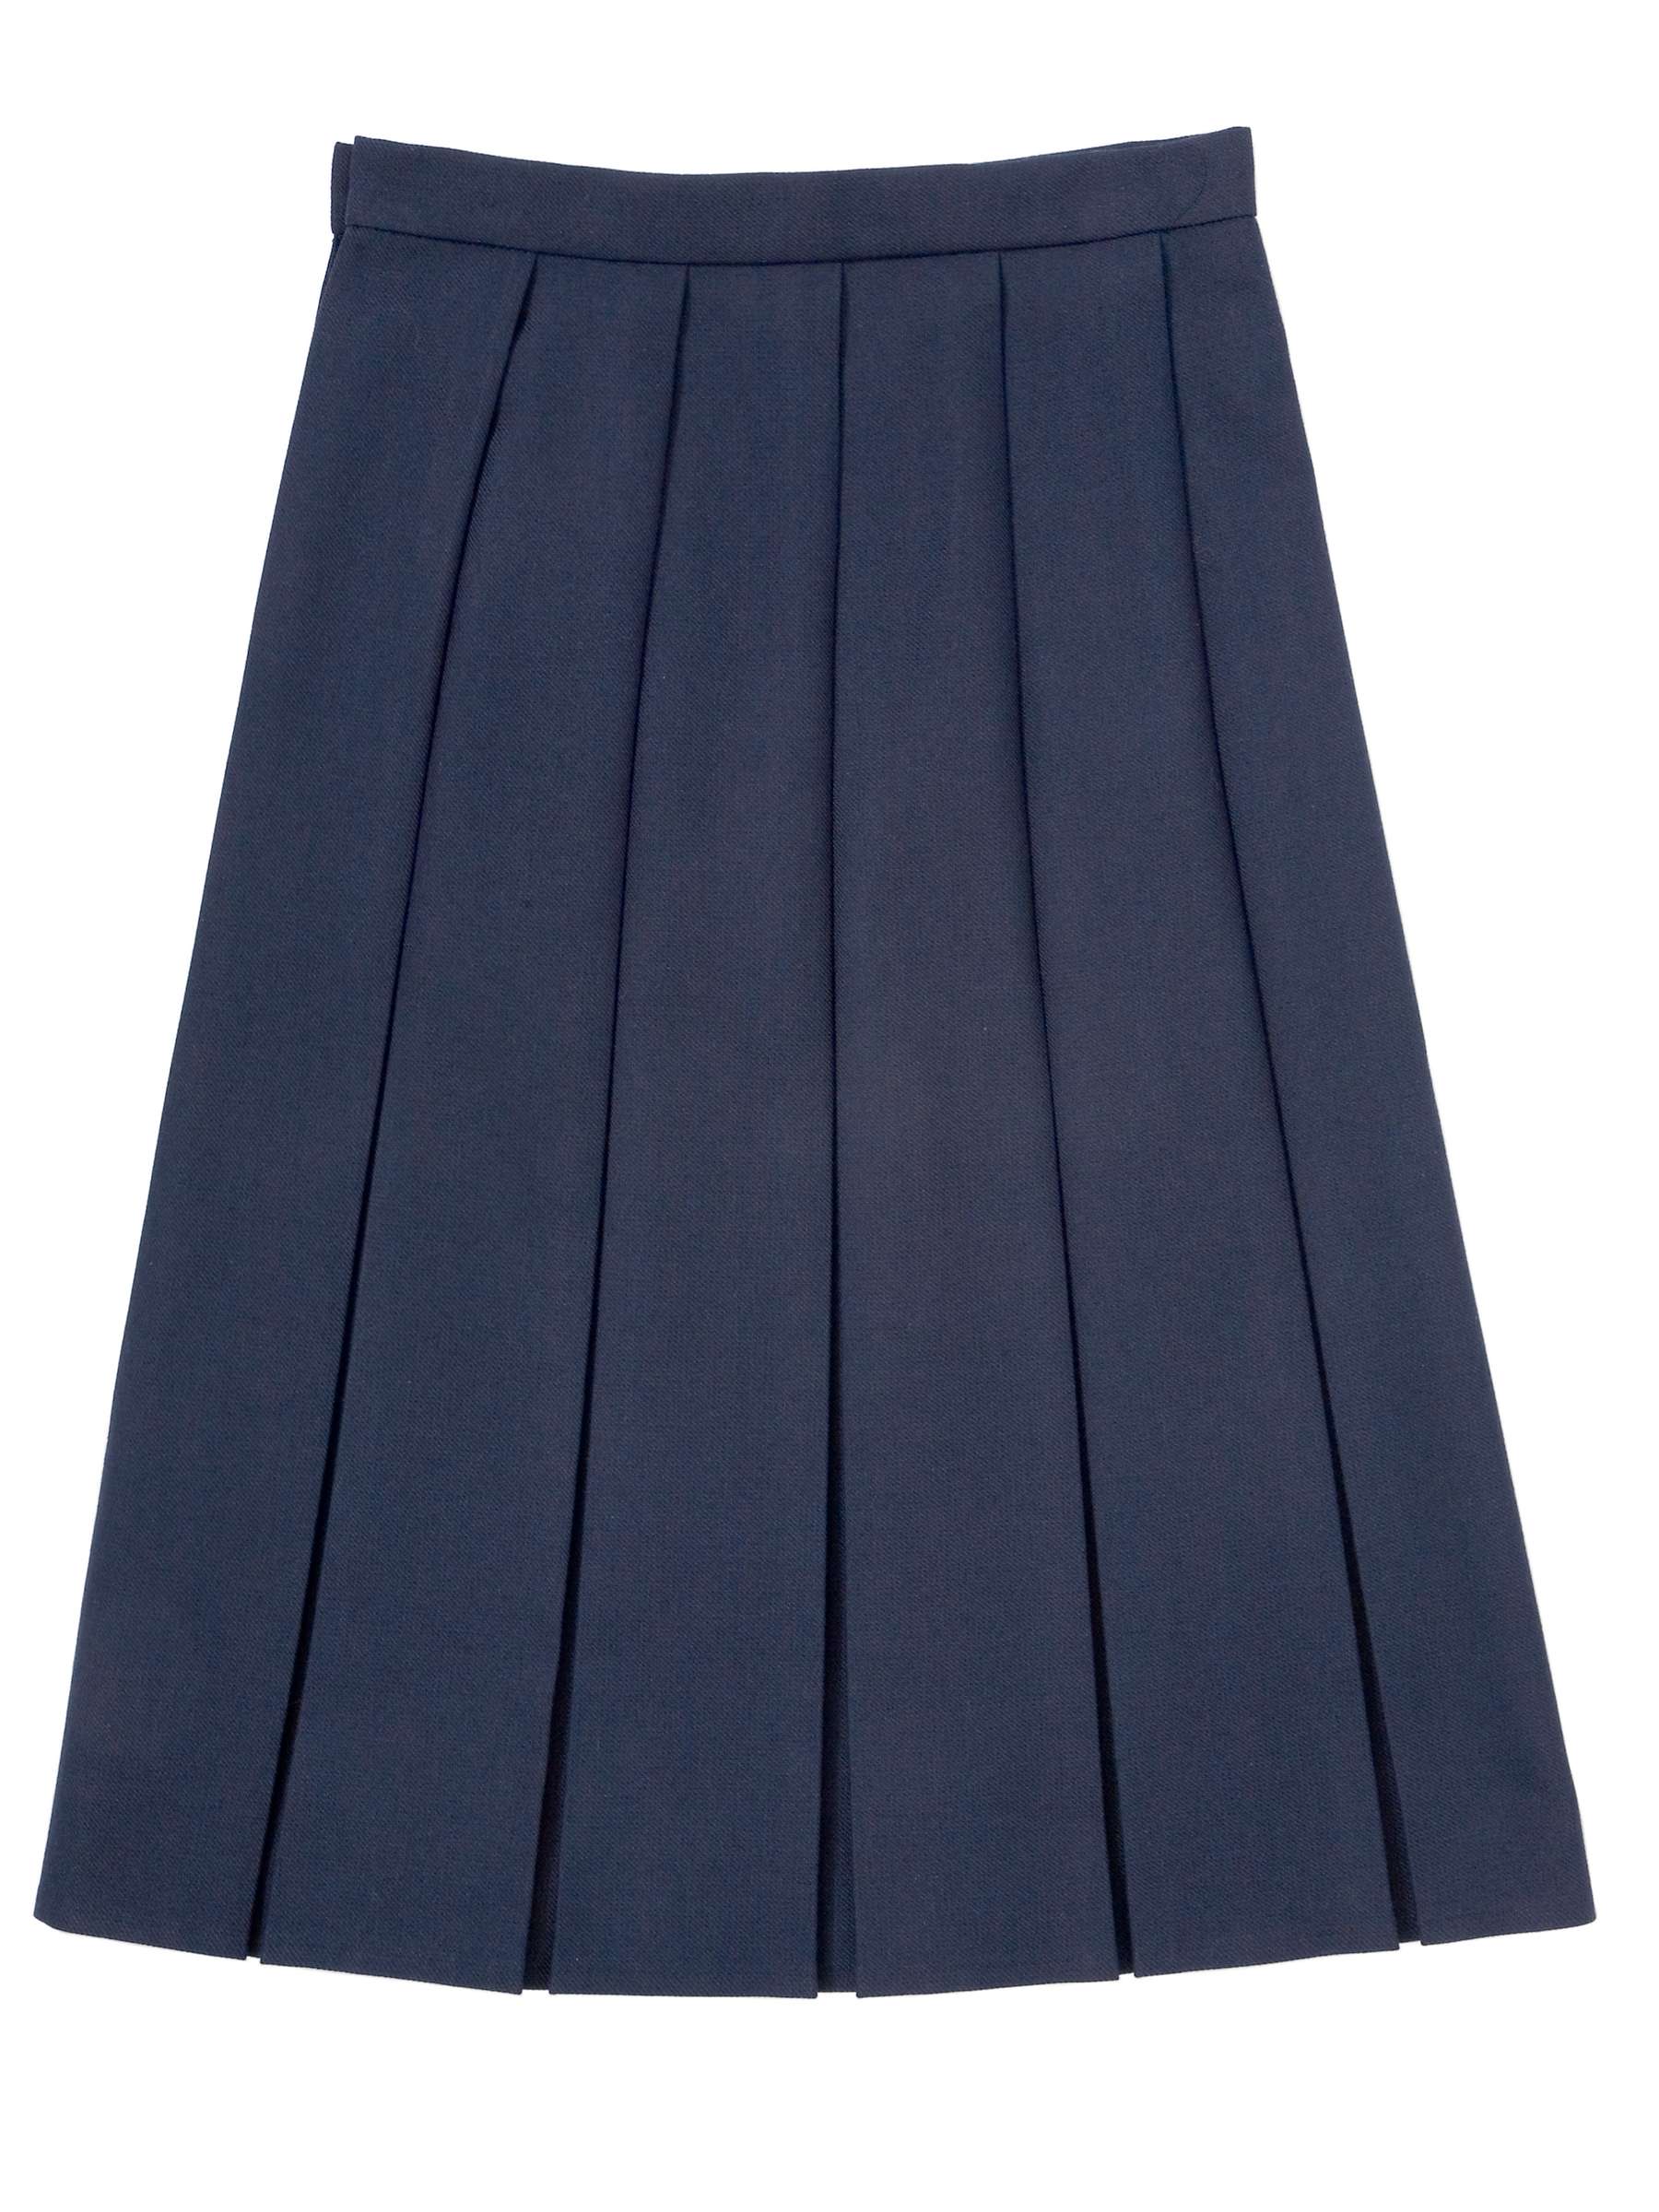 Buy Girls' School Box Pleat Skirt, Navy Online at johnlewis.com